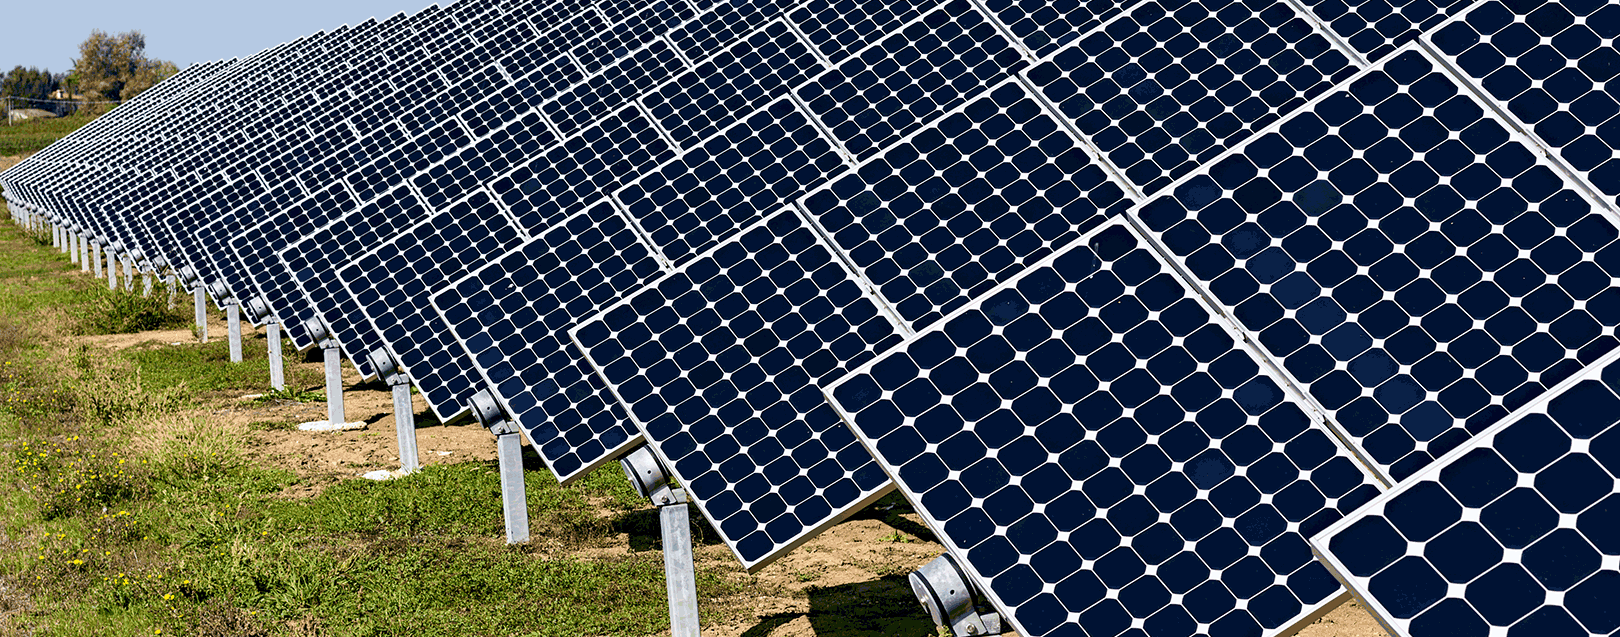 India's solar power capacity crosses 10 GW: Piyush Goyal